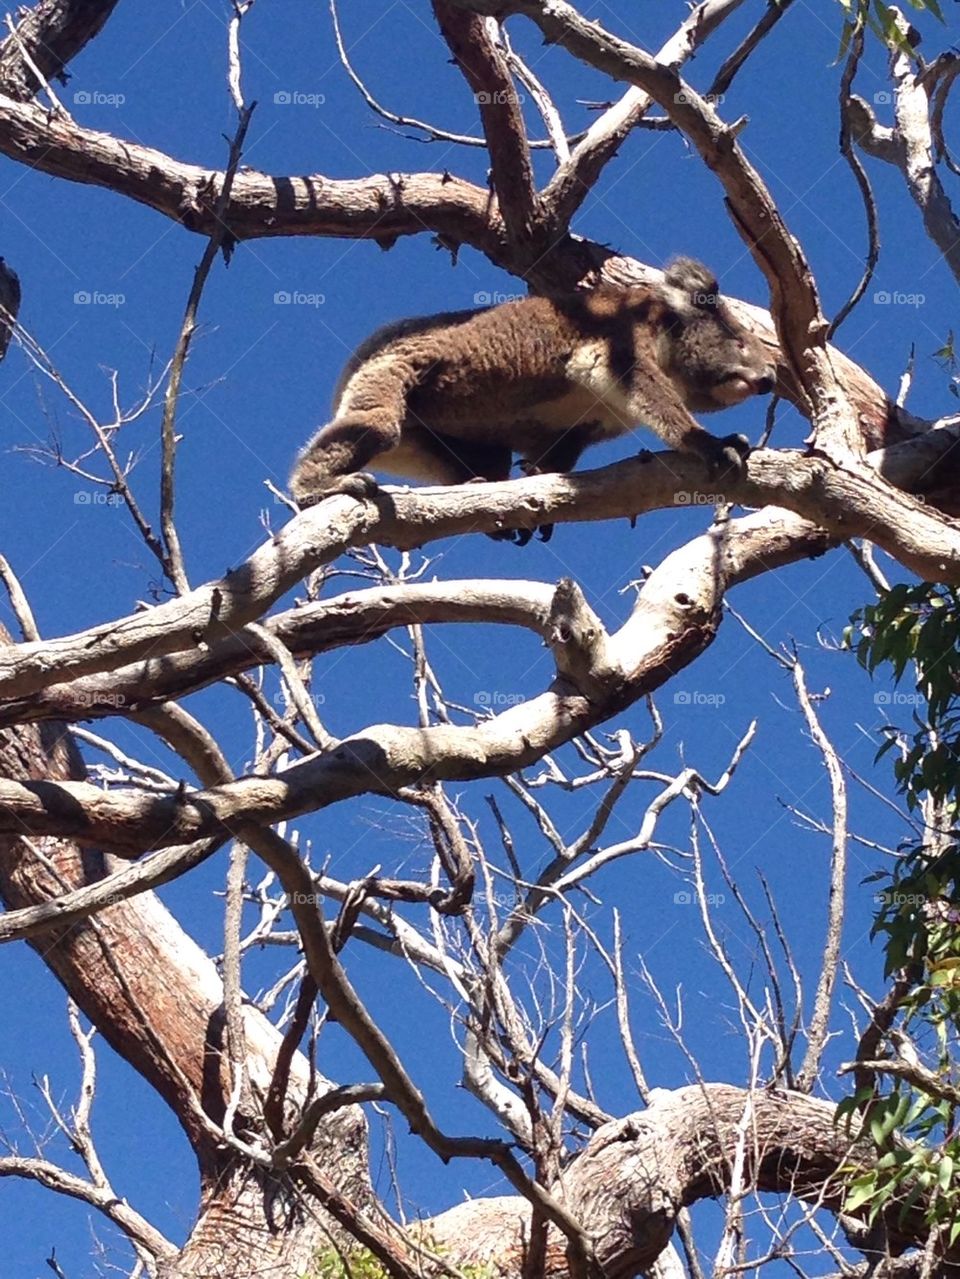 Koala, Australia 